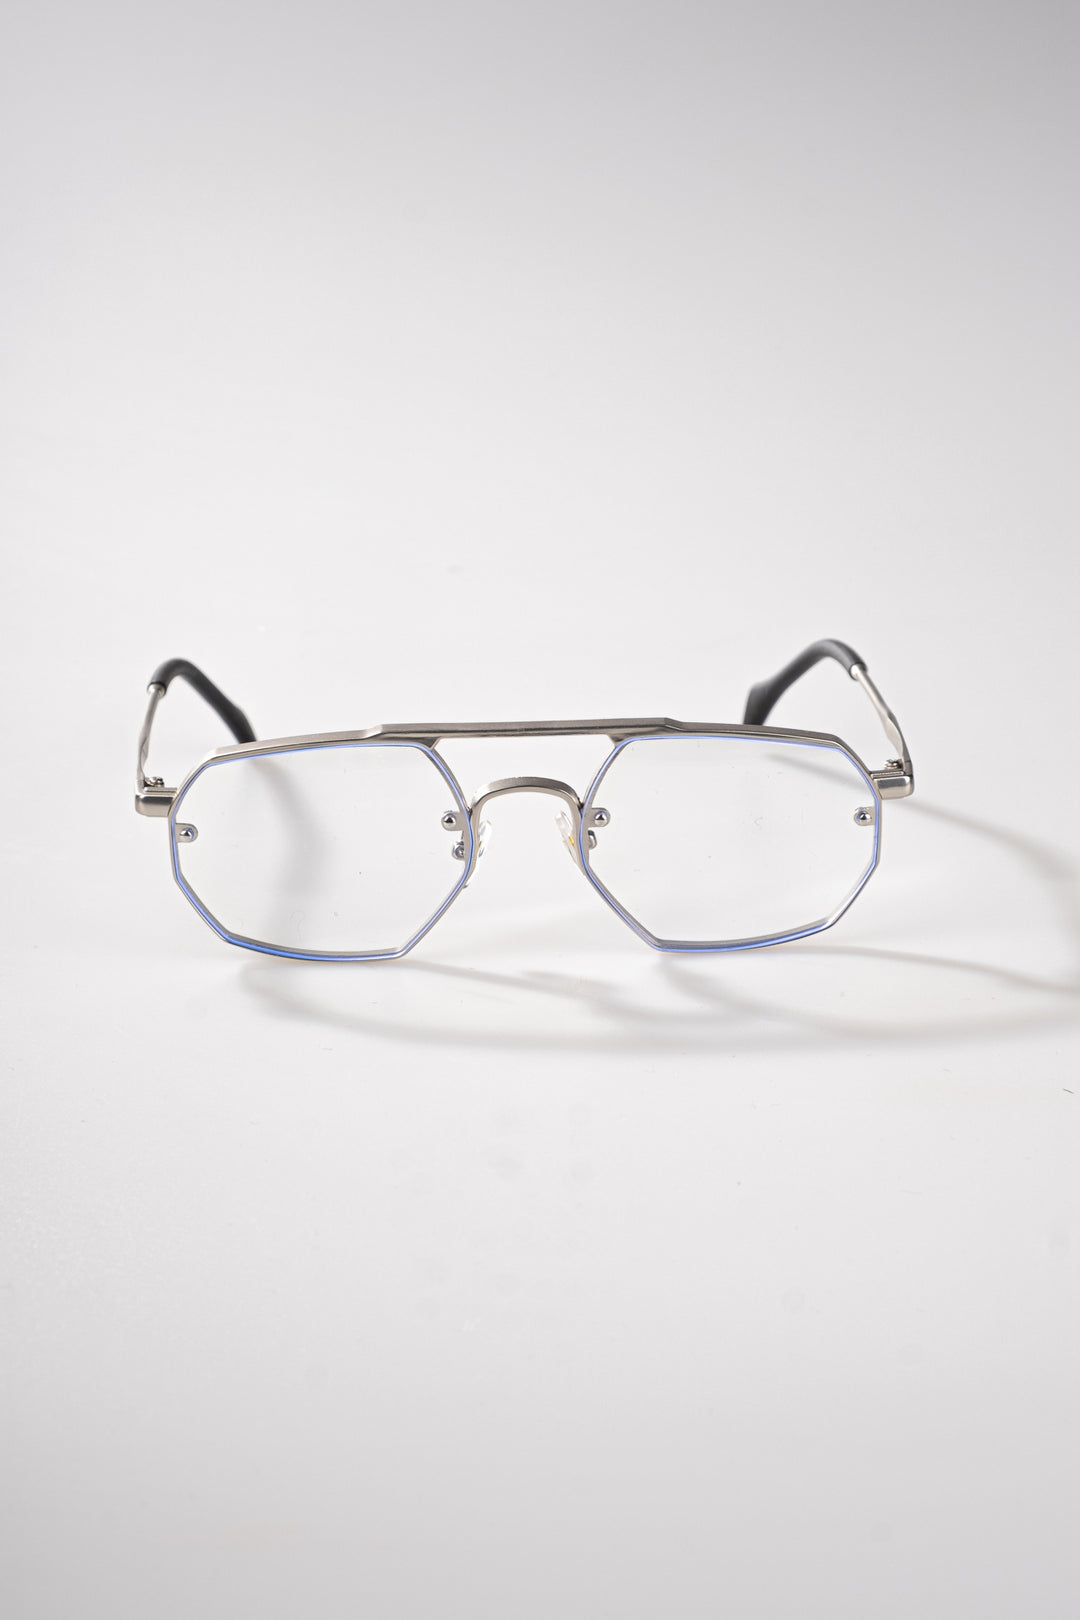 Prime Blue Light Protection Glasses